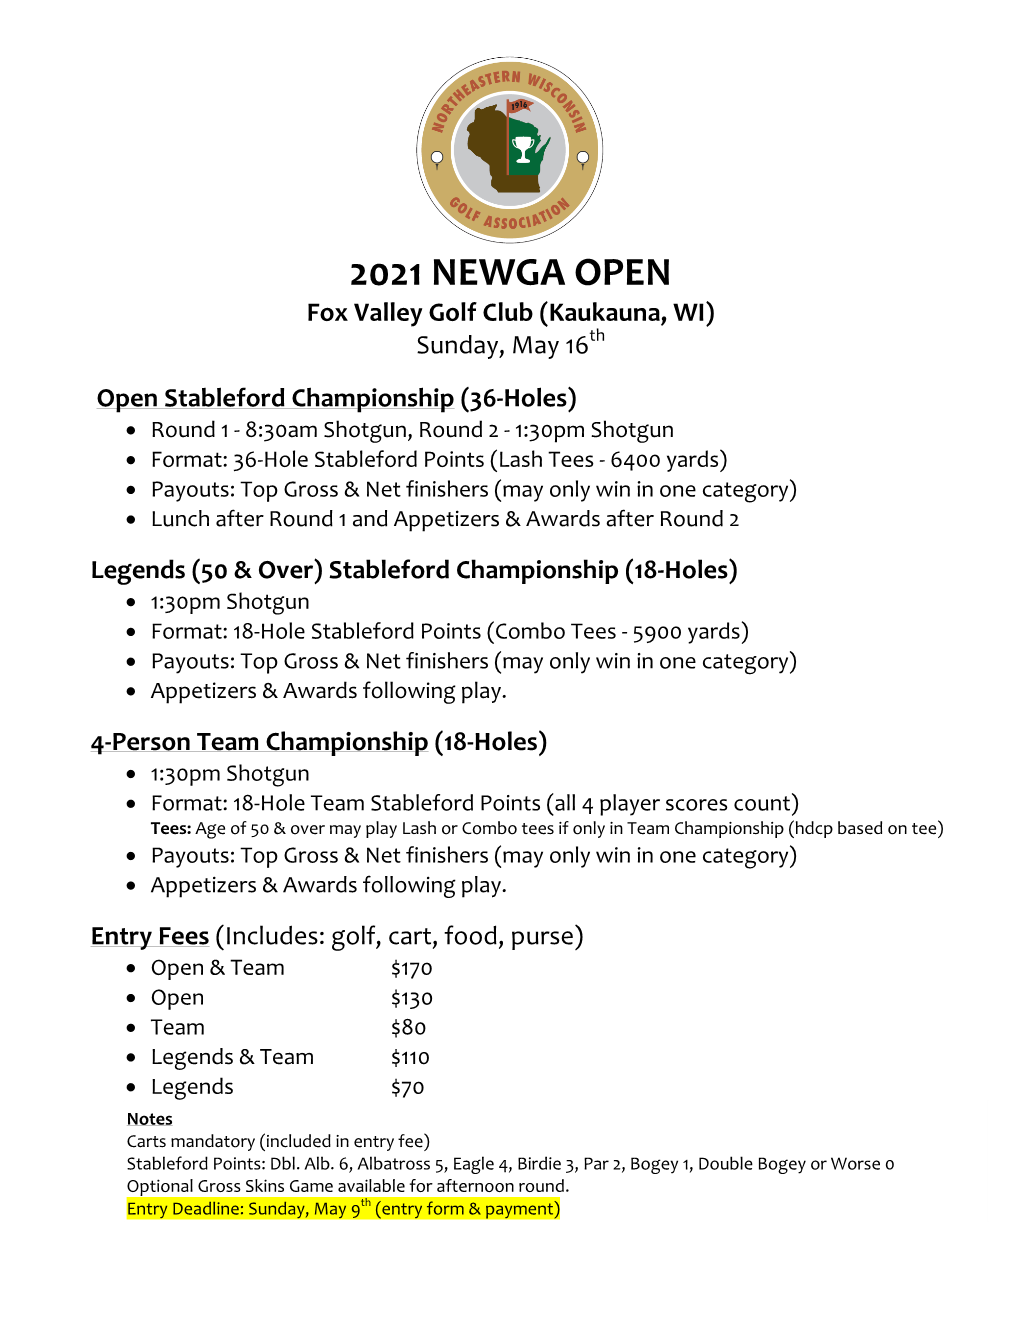 2021 Newga Open Entry Form